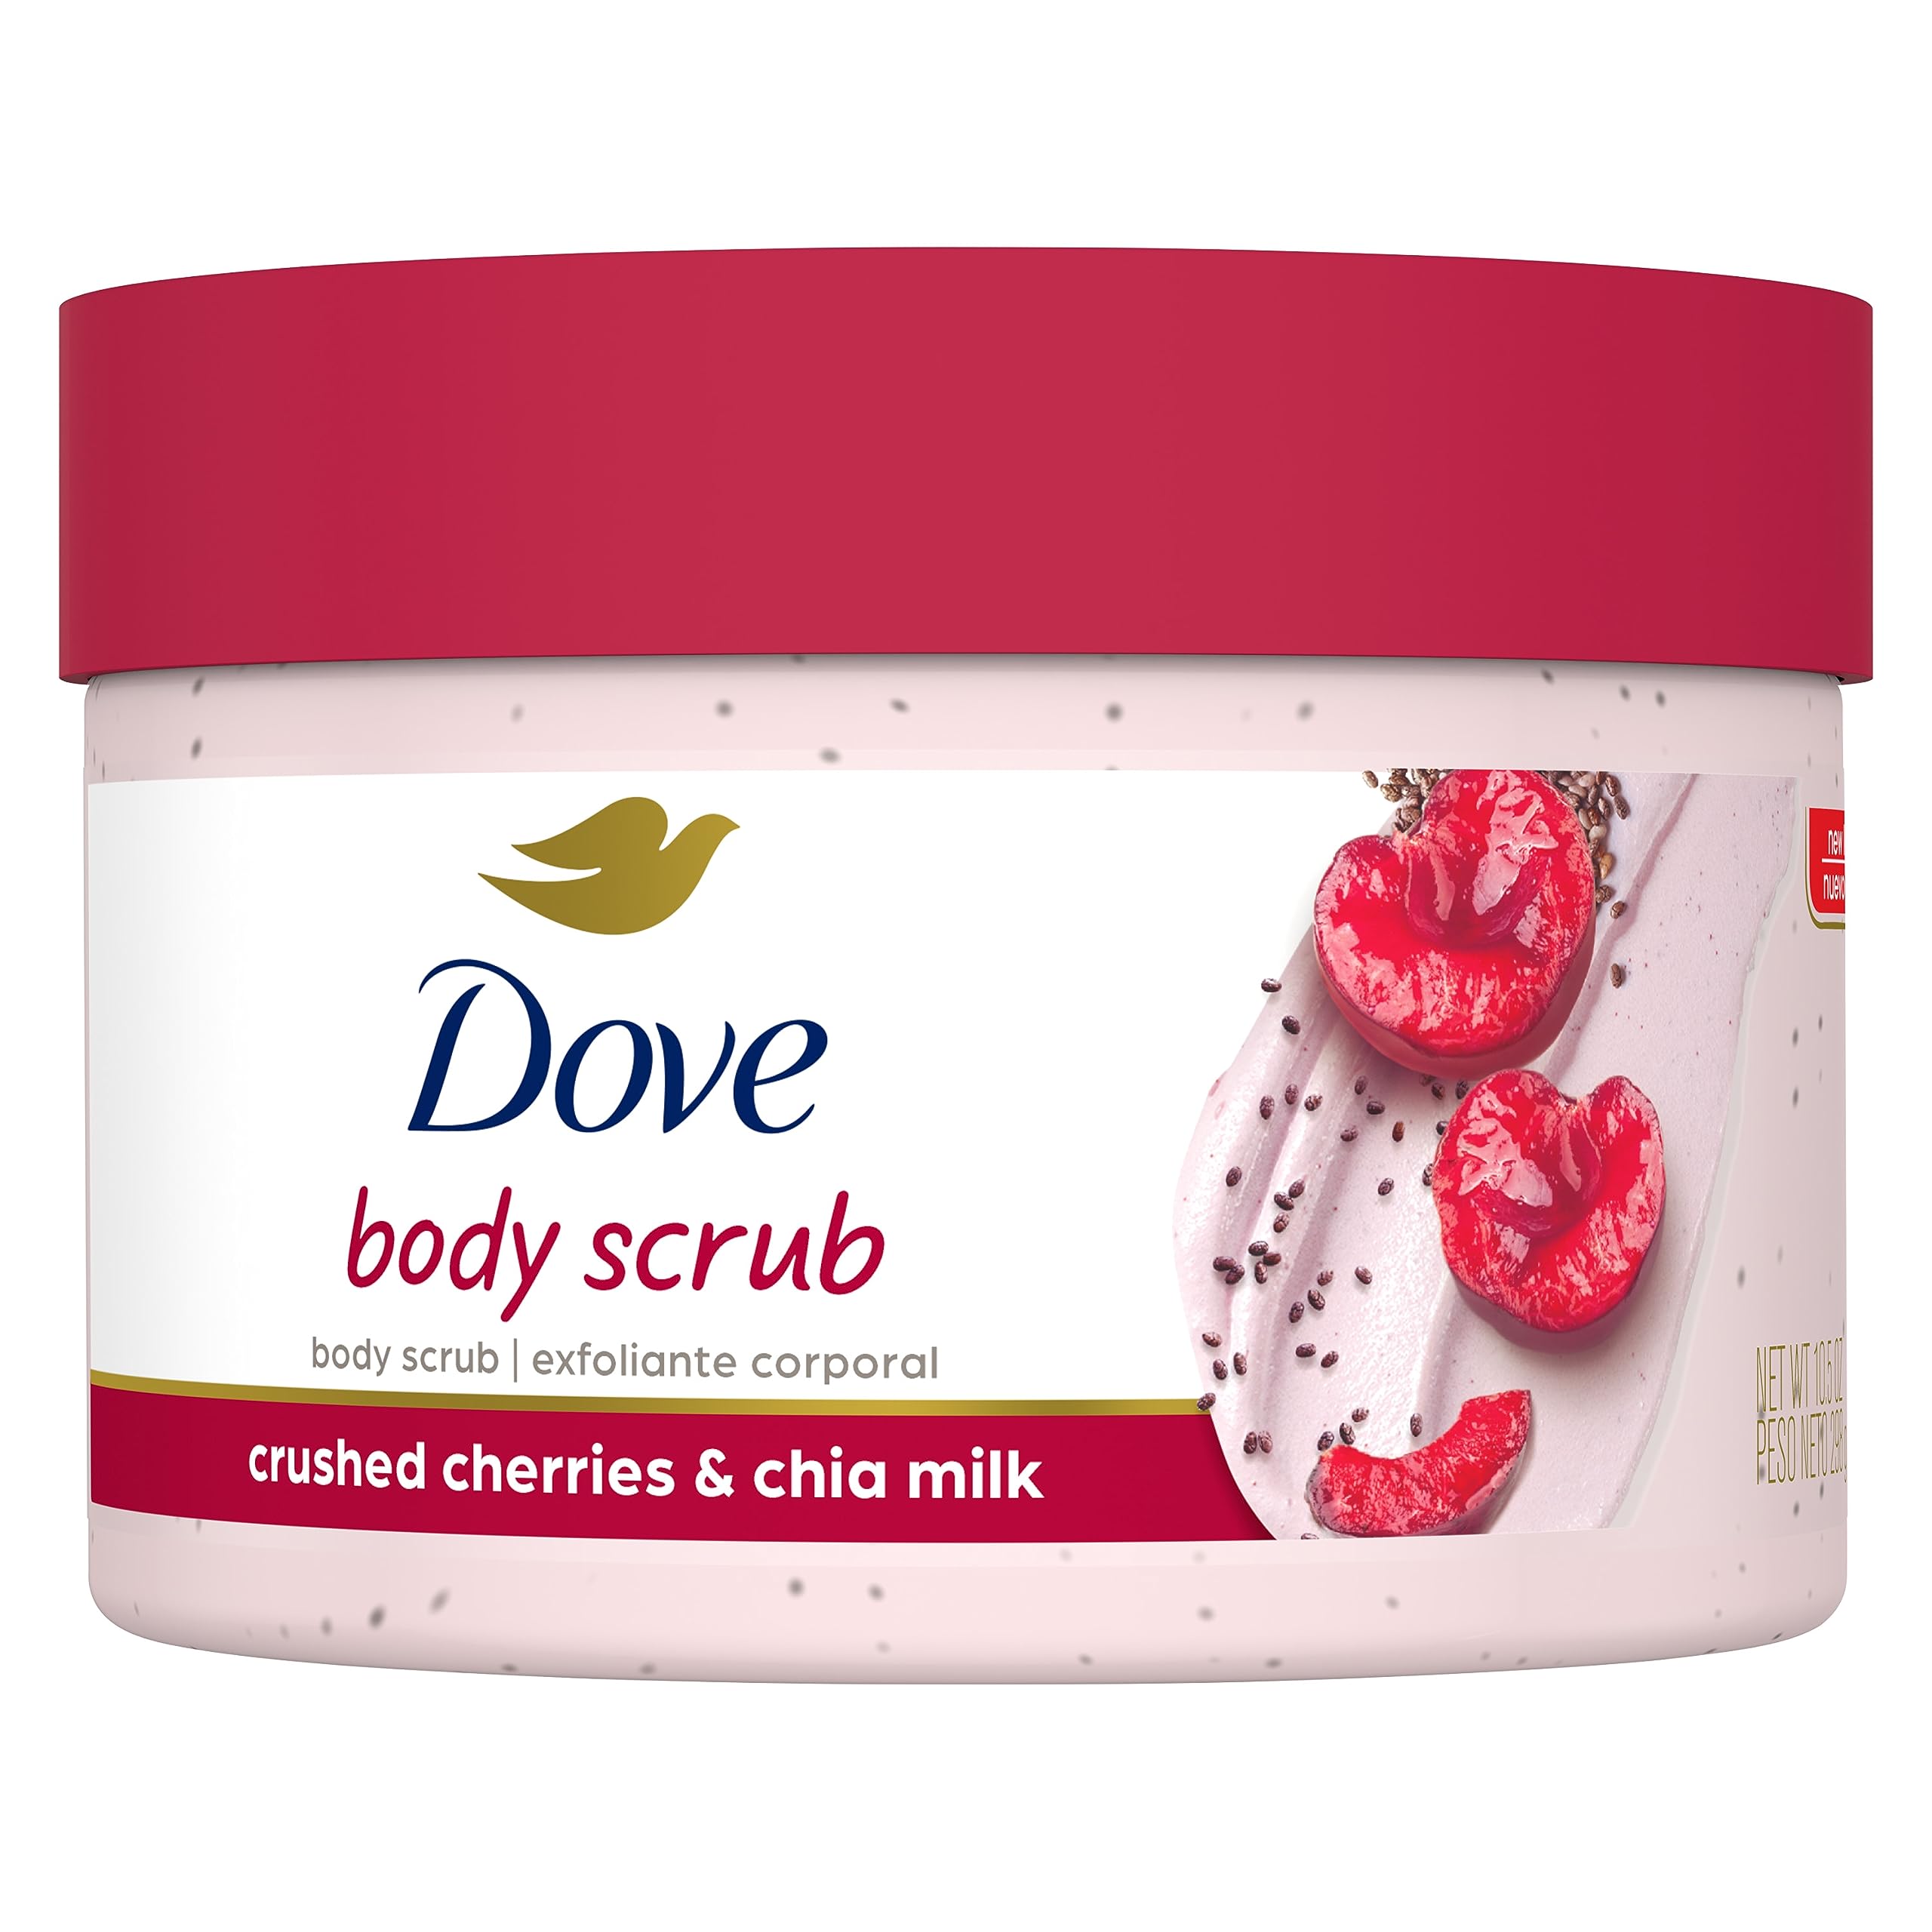 Dove Exfoliating Body Polish Crushed Cherries & Chia Milk Skin Care For Revitalized Skin Formulated With ¼ Moisturizing Cream 10.5 oz